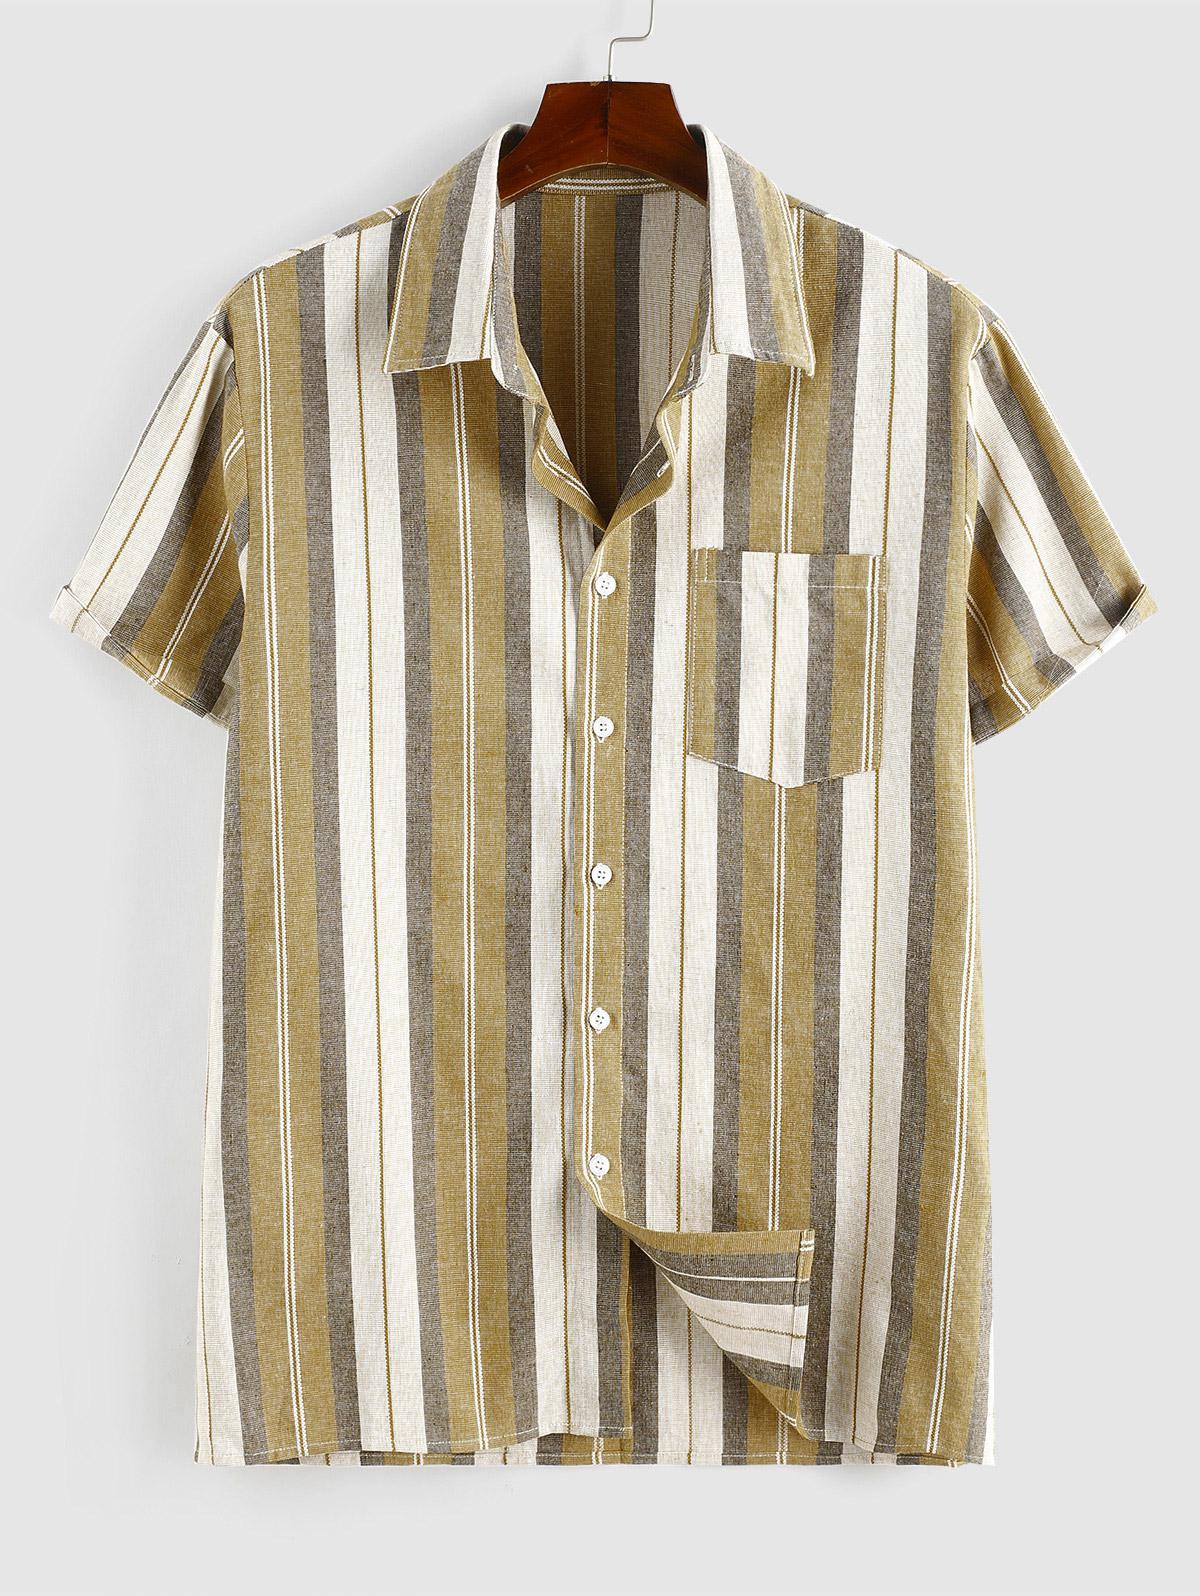 ZAFUL Men's ZAFUL Button Up Contrasting Vertical Stripe Print Shirt Xl Deep yellow